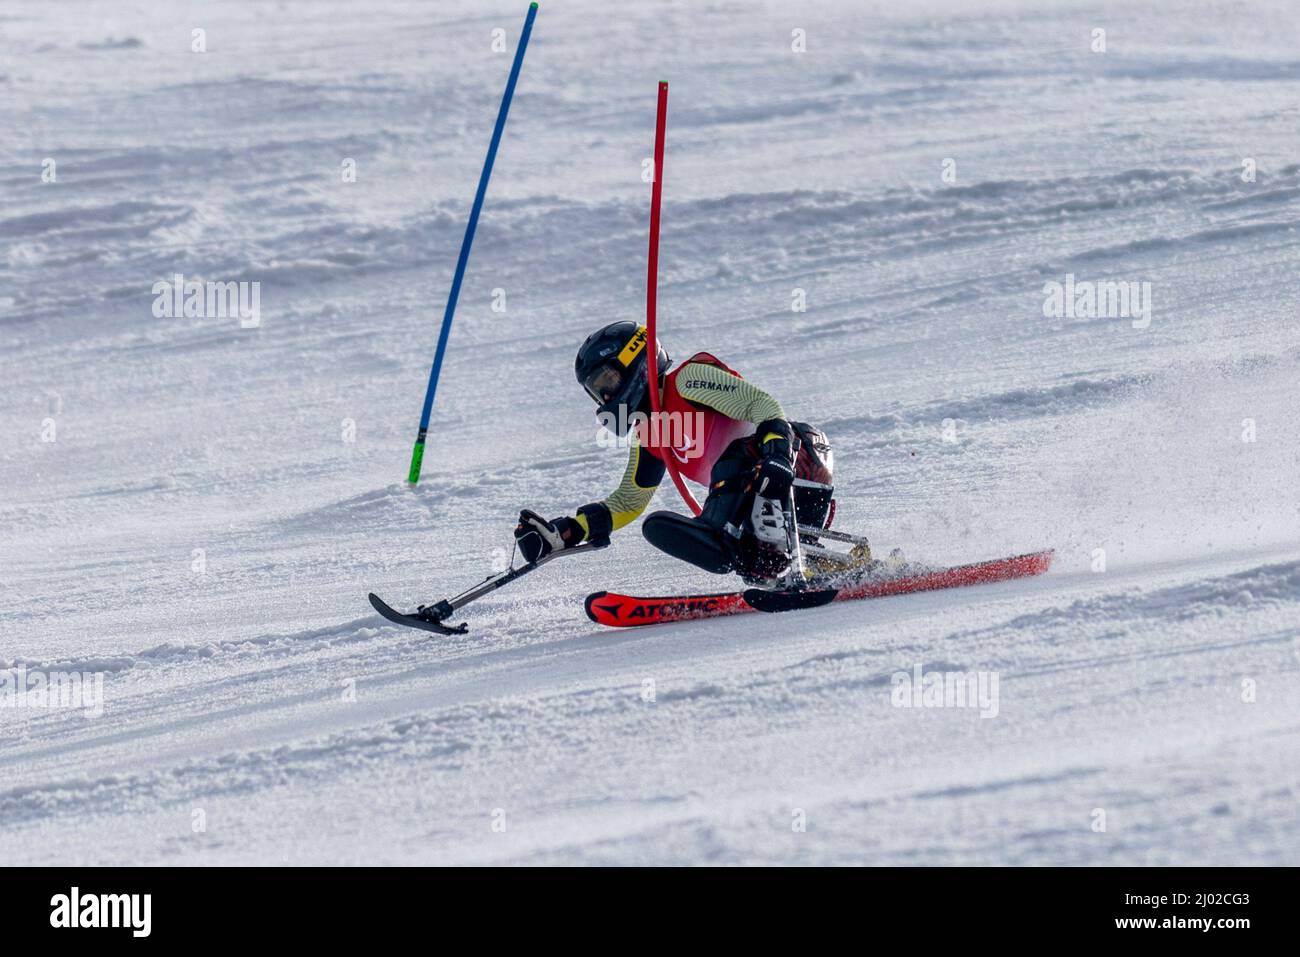 Yanqing (China) / Medal Plaza / 12.03.22  Para Ski Alpin, FORSTER, Anna-Lena (GER) vom BRSV Radolfzell (BAD) beim Women’s Slalom Wettbewerb Sitting. Stock Photo